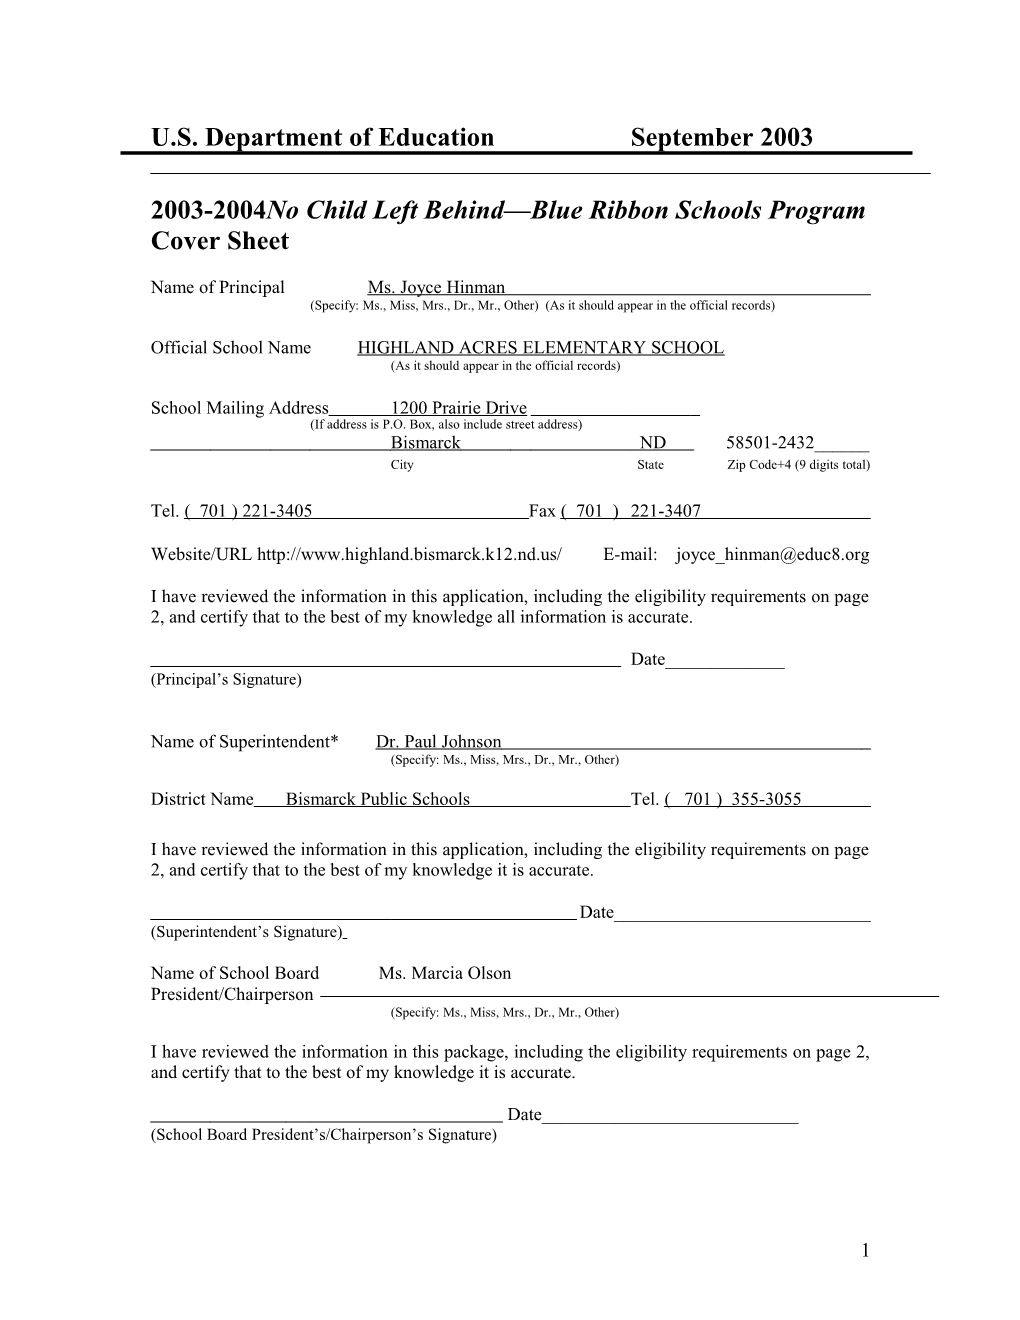 Highland Acres Elementary School 2004 No Child Left Behind-Blue Ribbon School Application